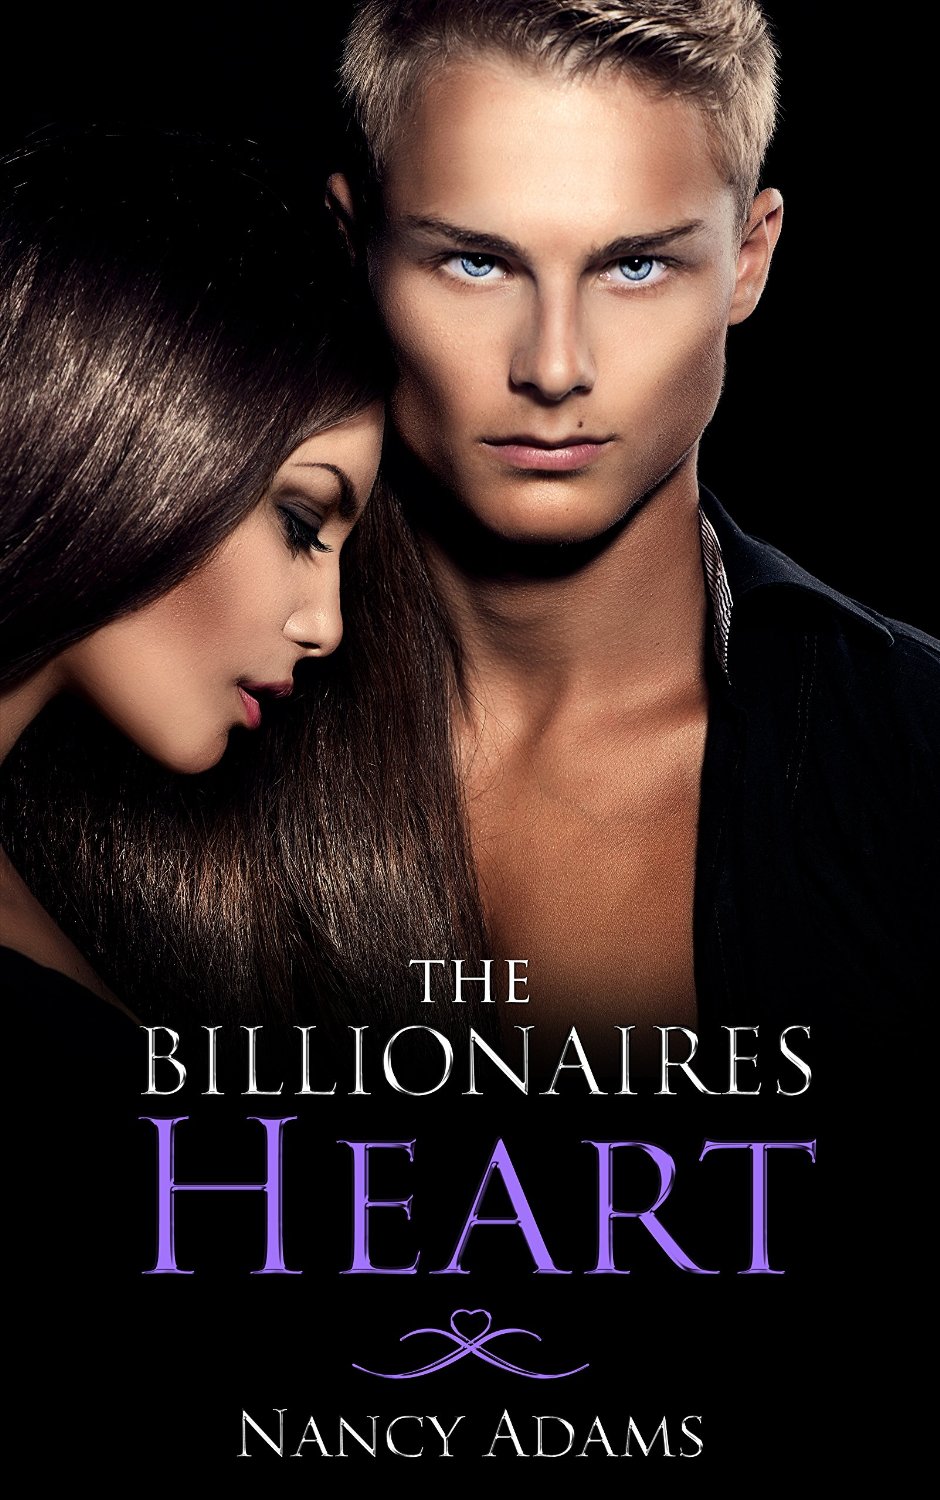 The Billionaires Heart – A Billionaire Romance by Nancy Adams